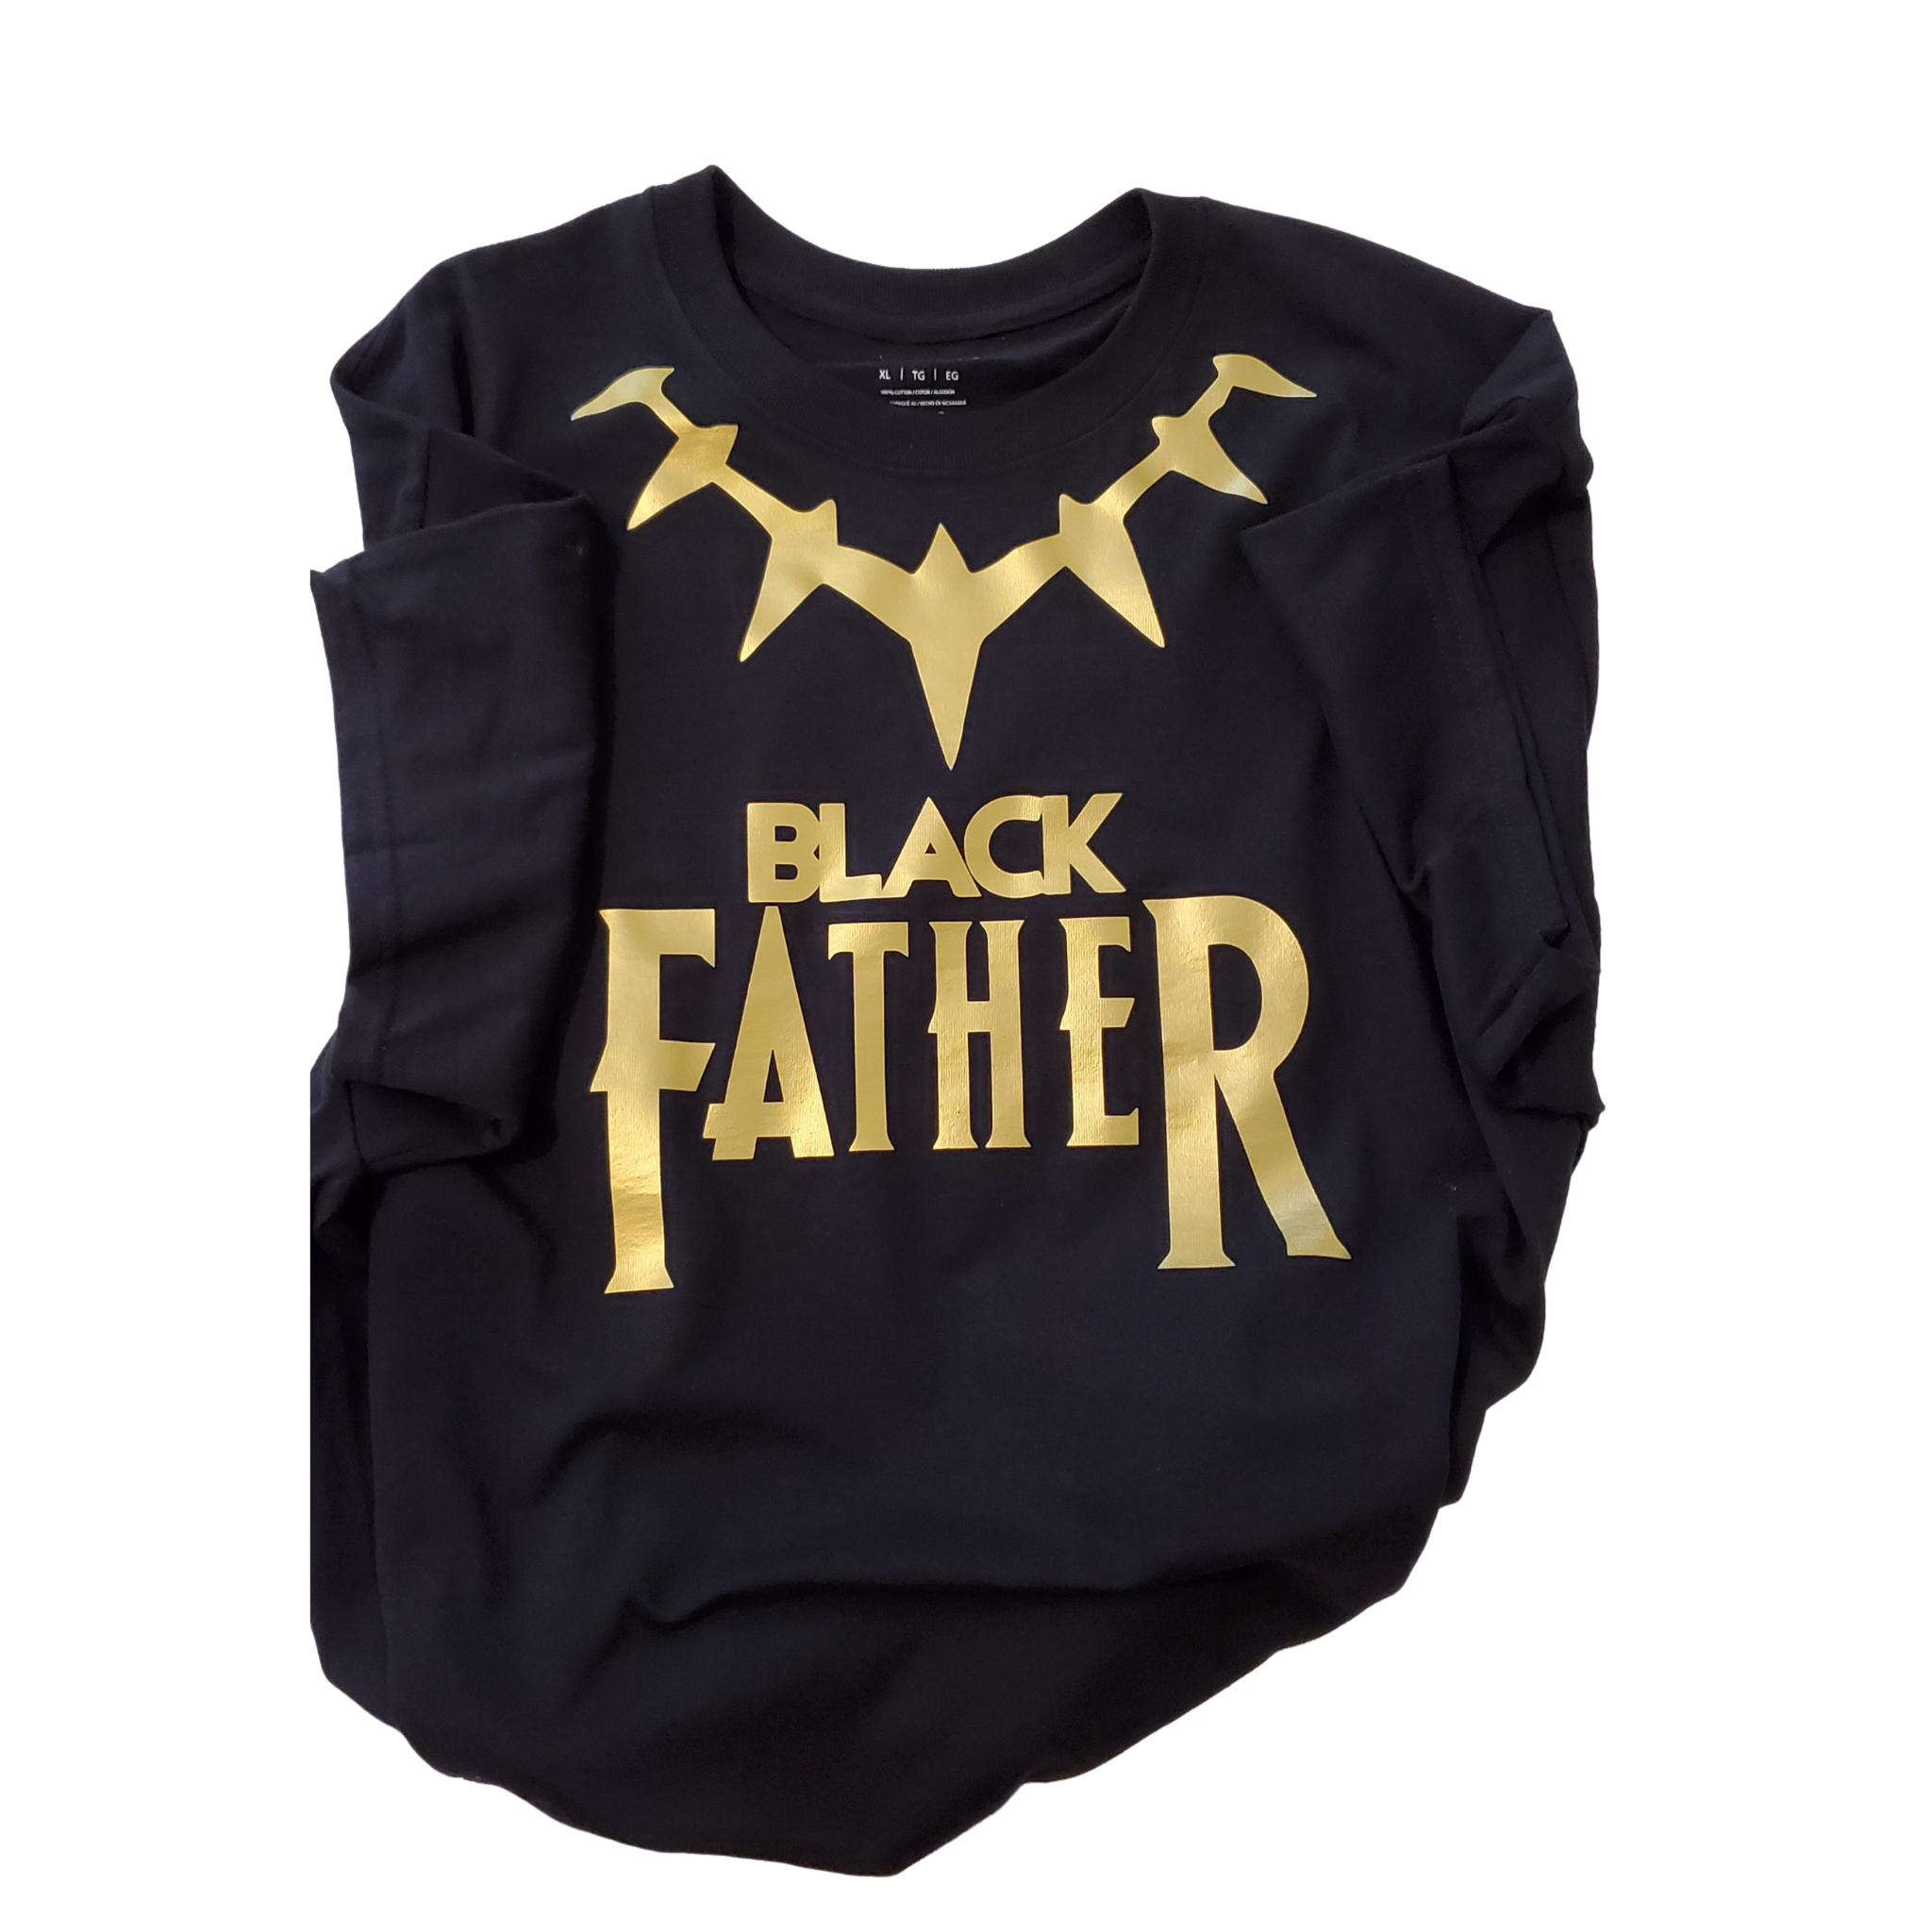 Black Father t shirt gold color